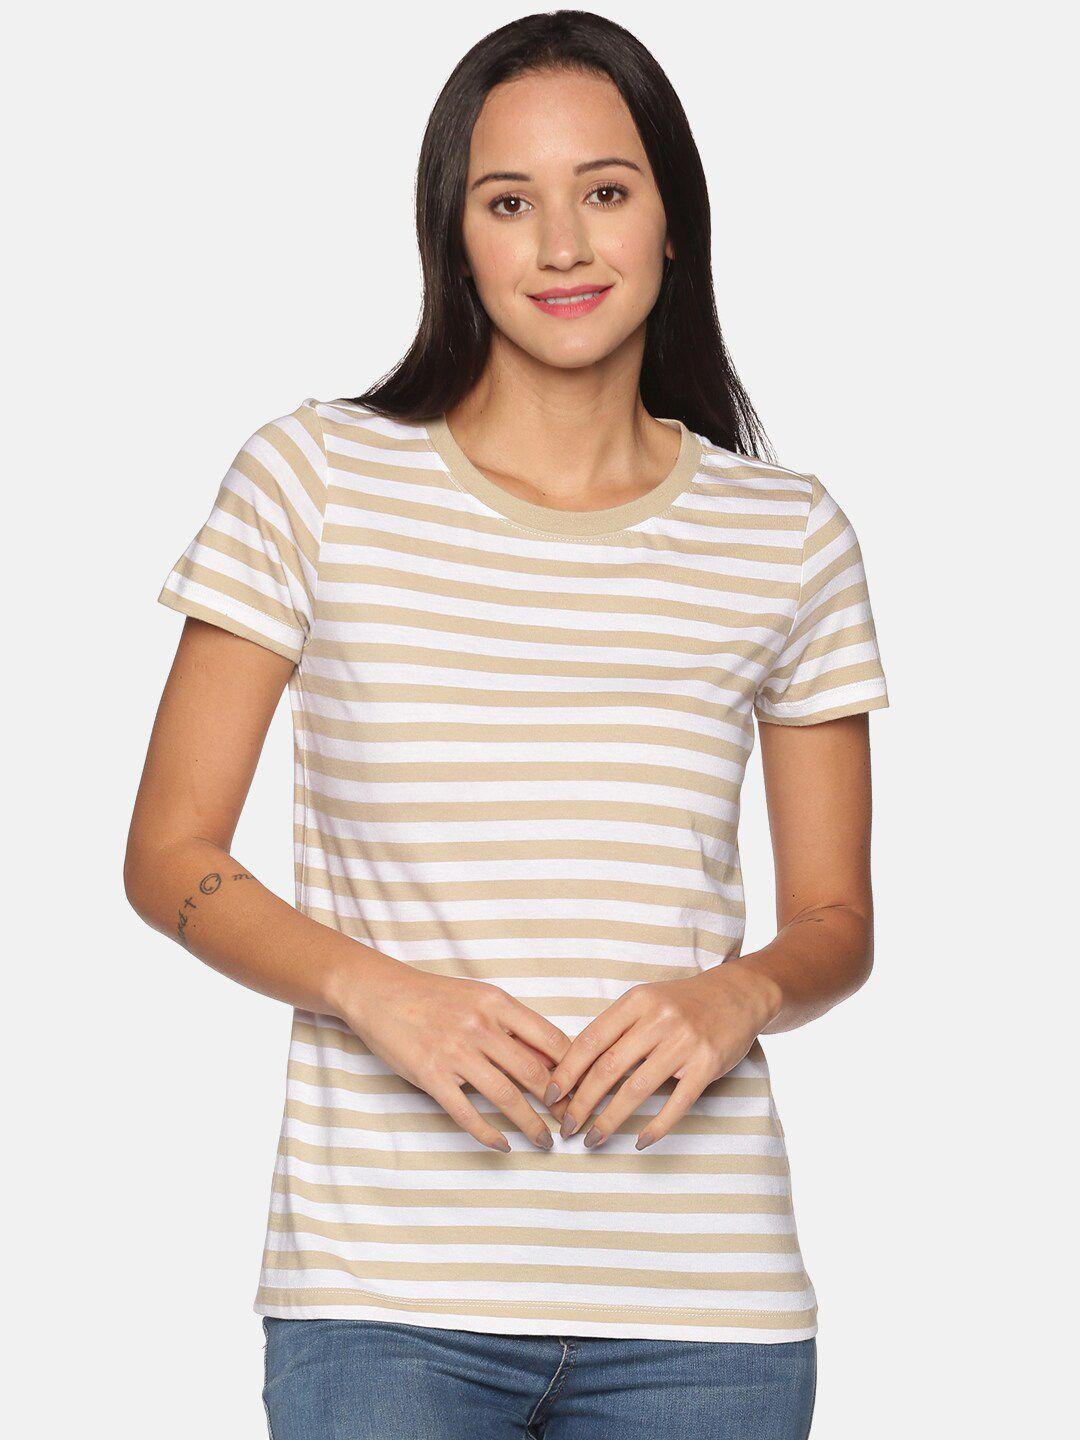 urgear women beige striped cotton t-shirt